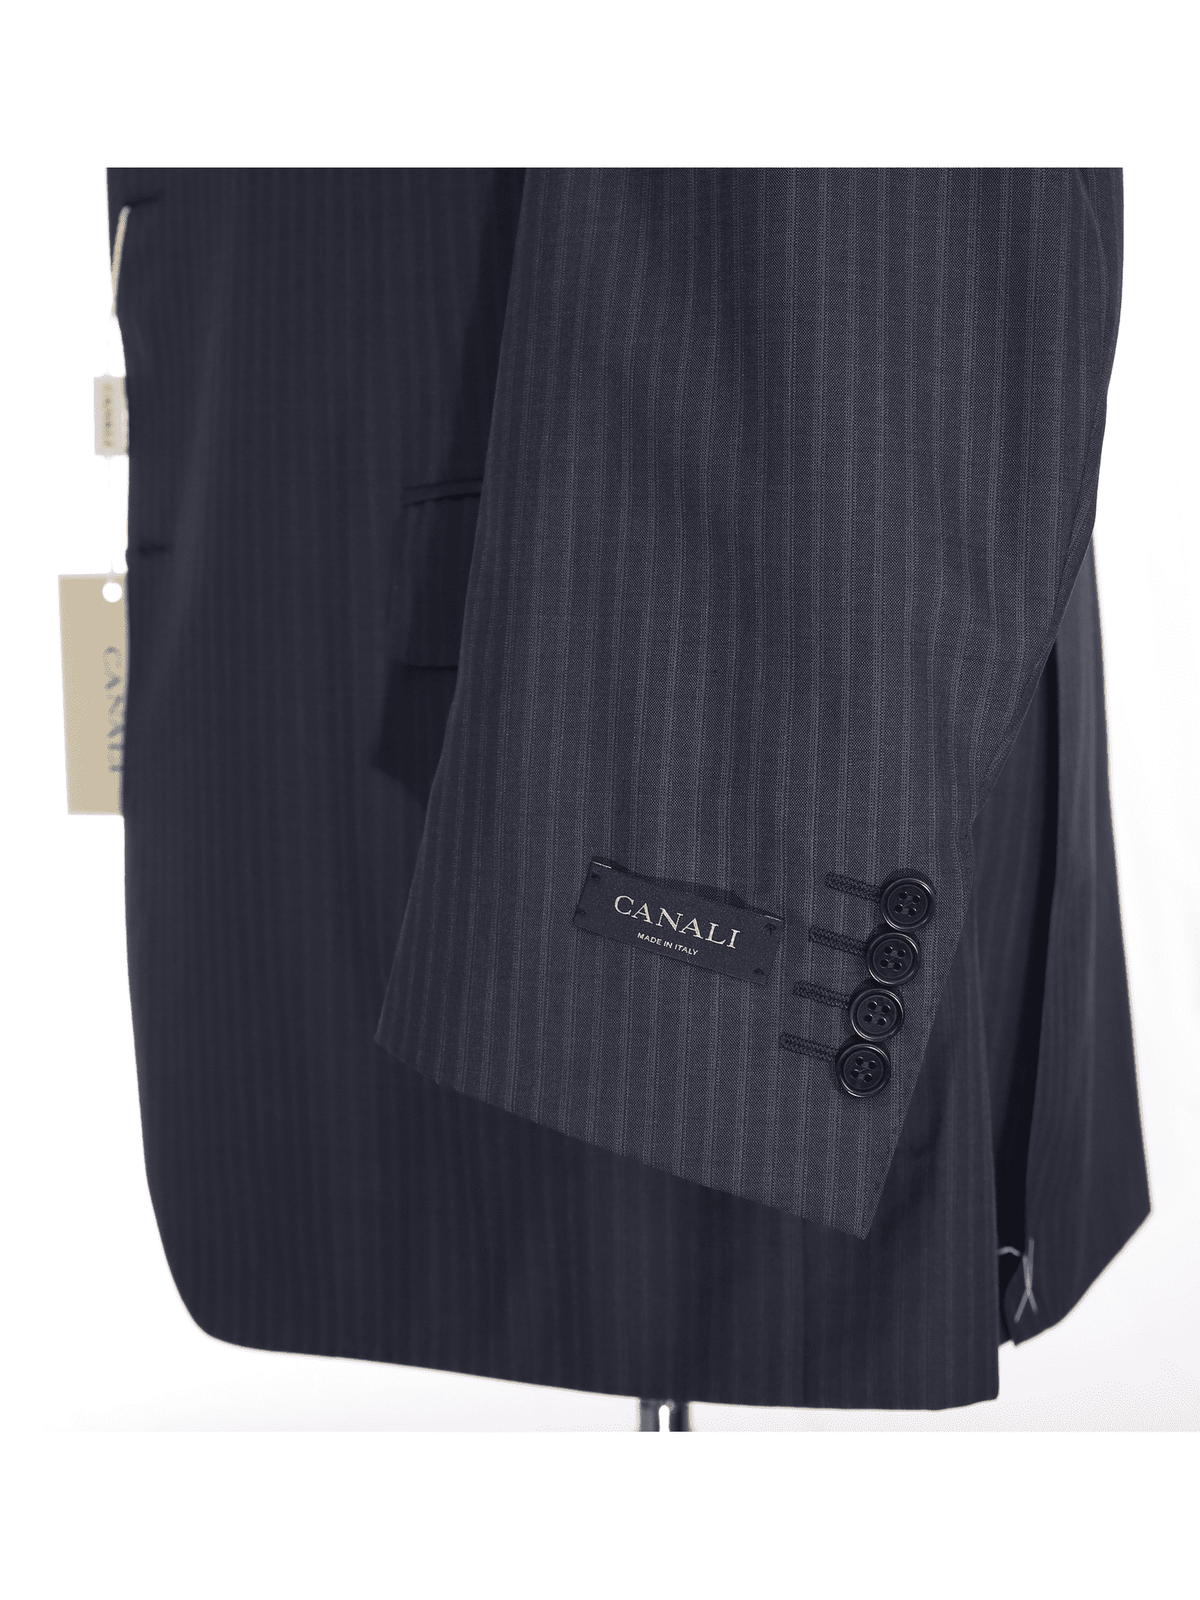 Canali SUITS 42L Canali Mens 42l 52 Drop 6 Classic Fit Blue Striped Two Button 100% Wool Suit